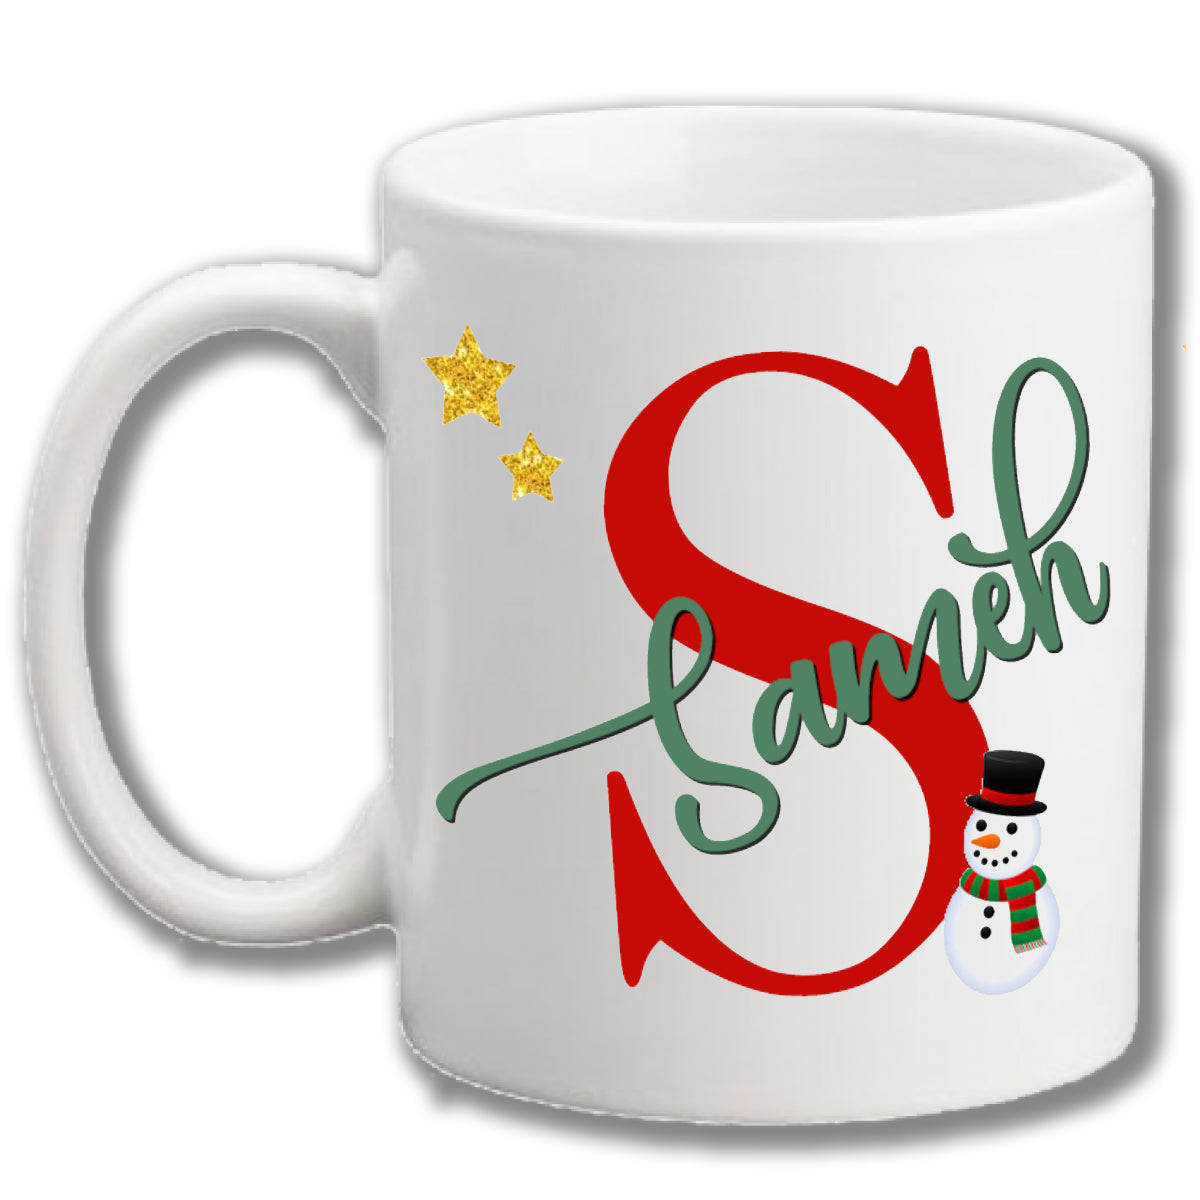 Personalized Christmas mug (Initials)